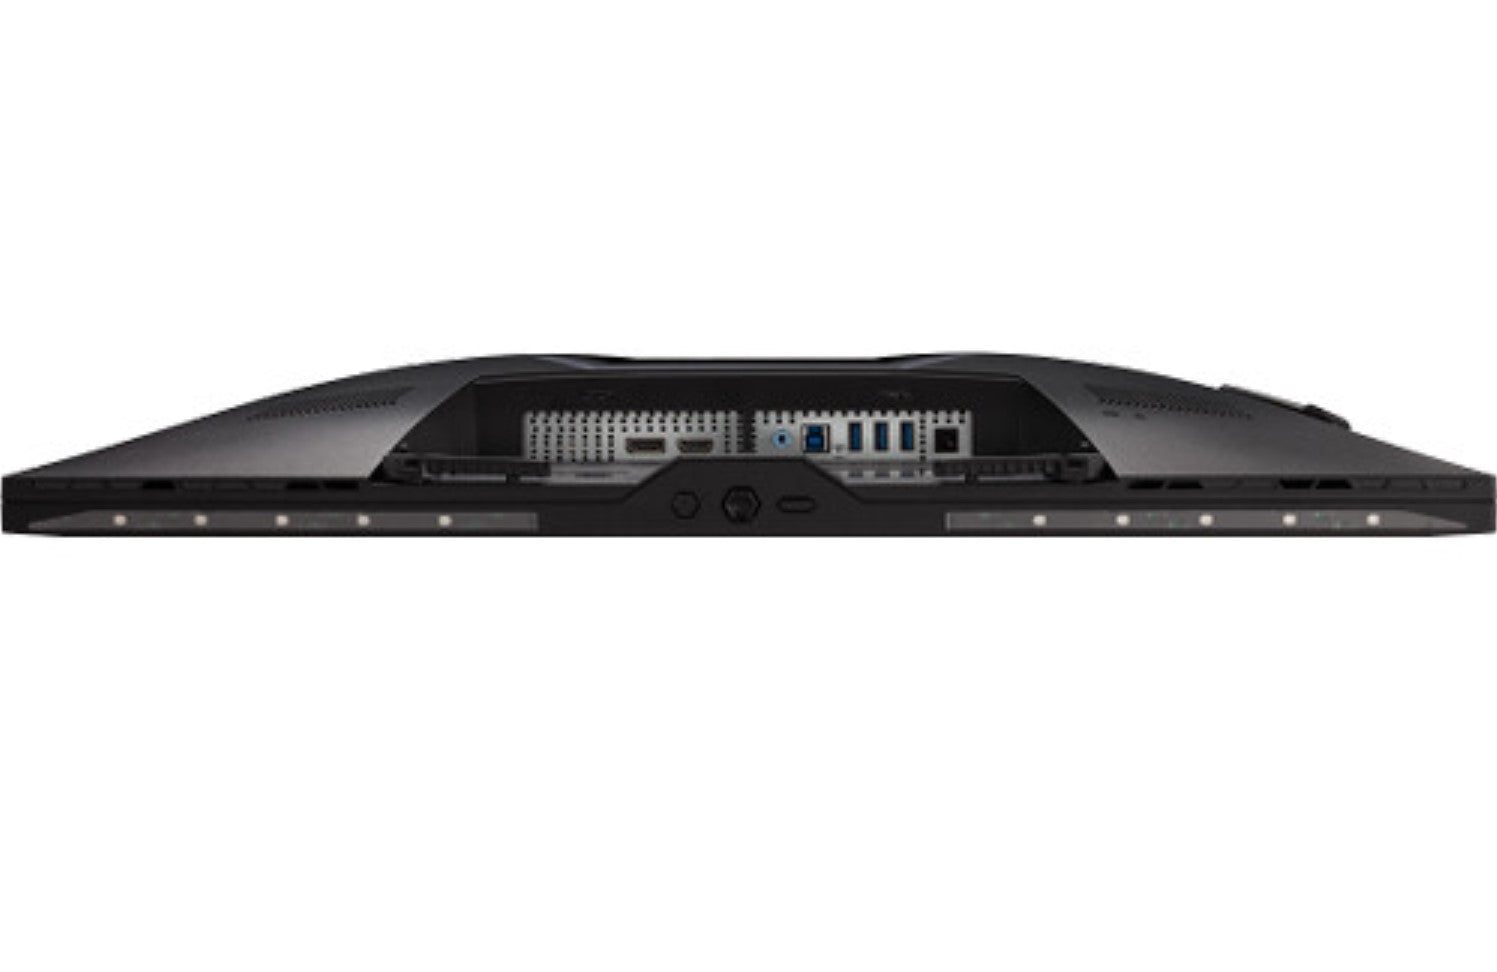 ViewSonic XG320U-S Elite 32" 16:9 144 Hz FreeSync IPS Gaming Monitor - Certified Refurbished